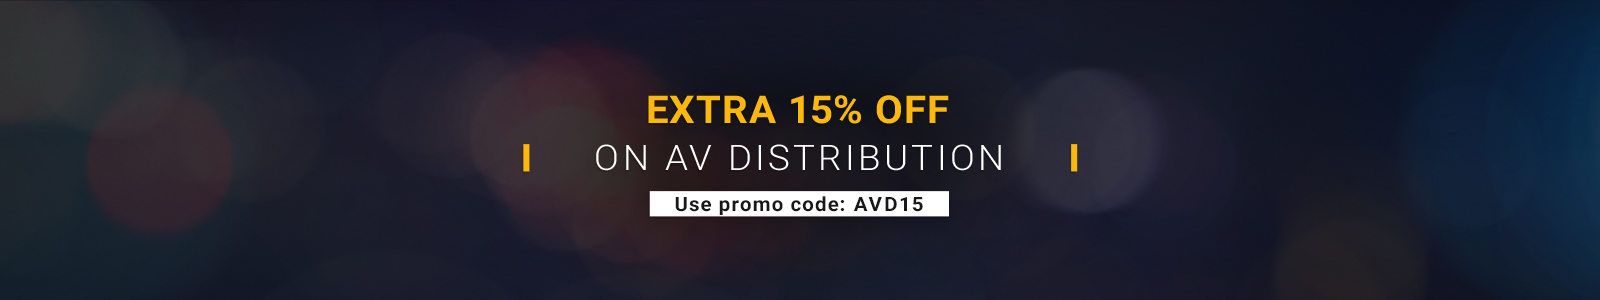 Extra 15% off on AV Distribution
Use promo code: AVD15
Shop Now